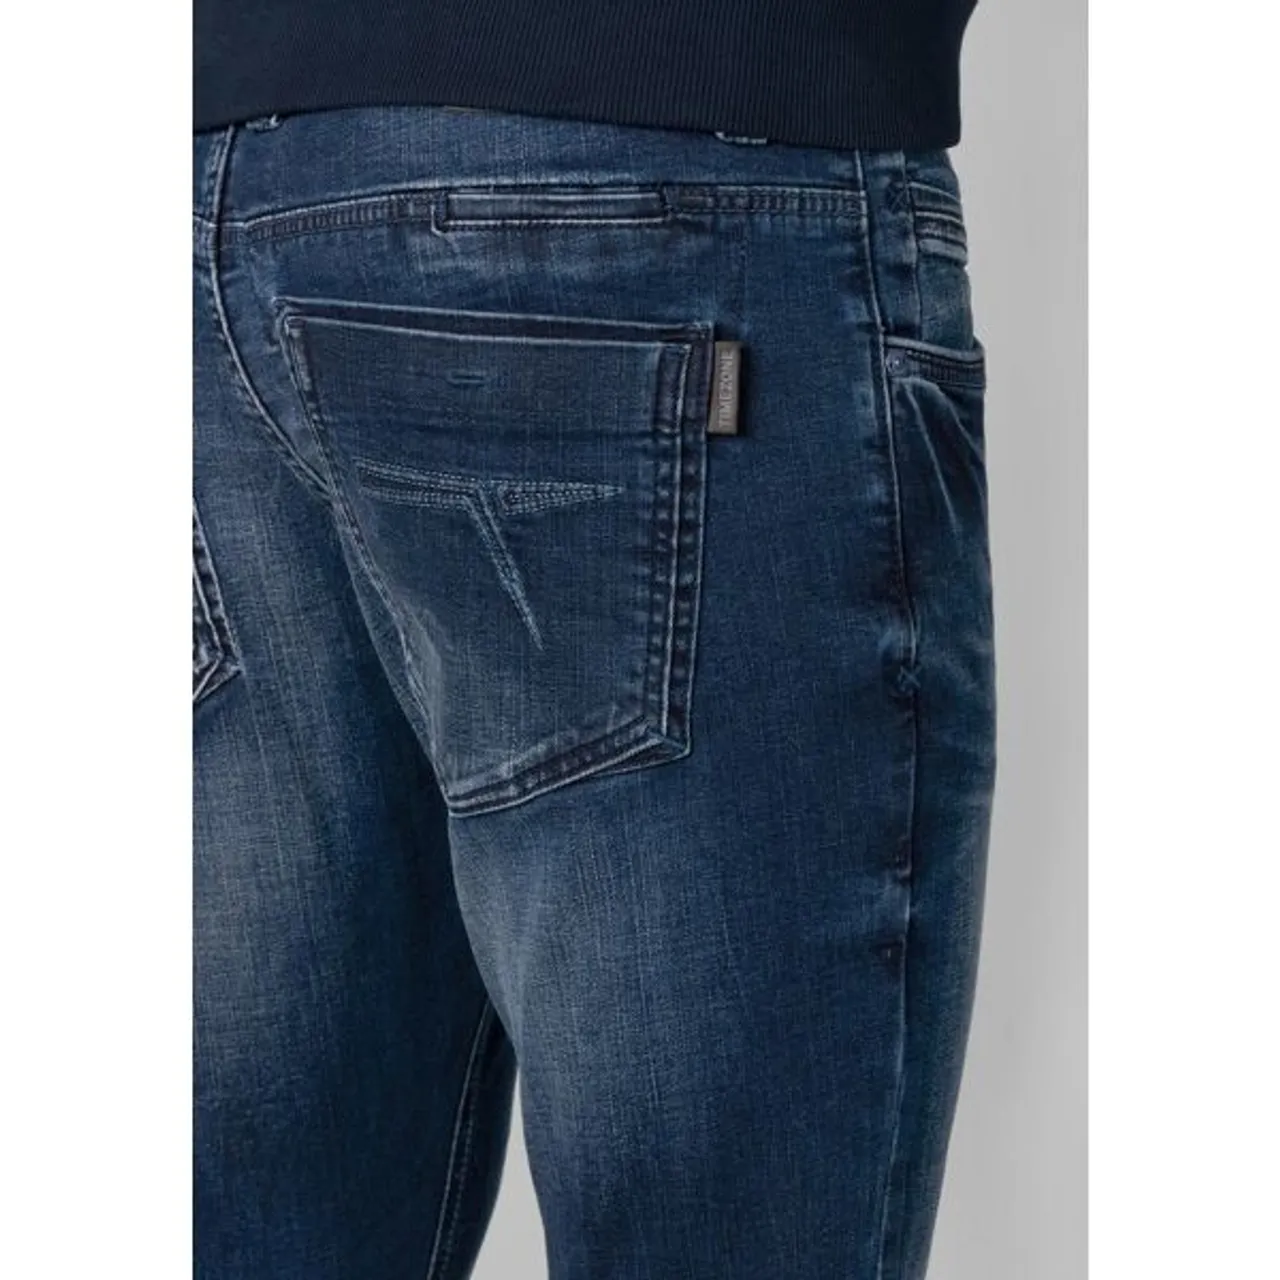 Regular-fit-Jeans TIMEZONE "Regular GerritTZ" Gr. 30, Länge 32, blau Herren Jeans 5-Pocket-Jeans